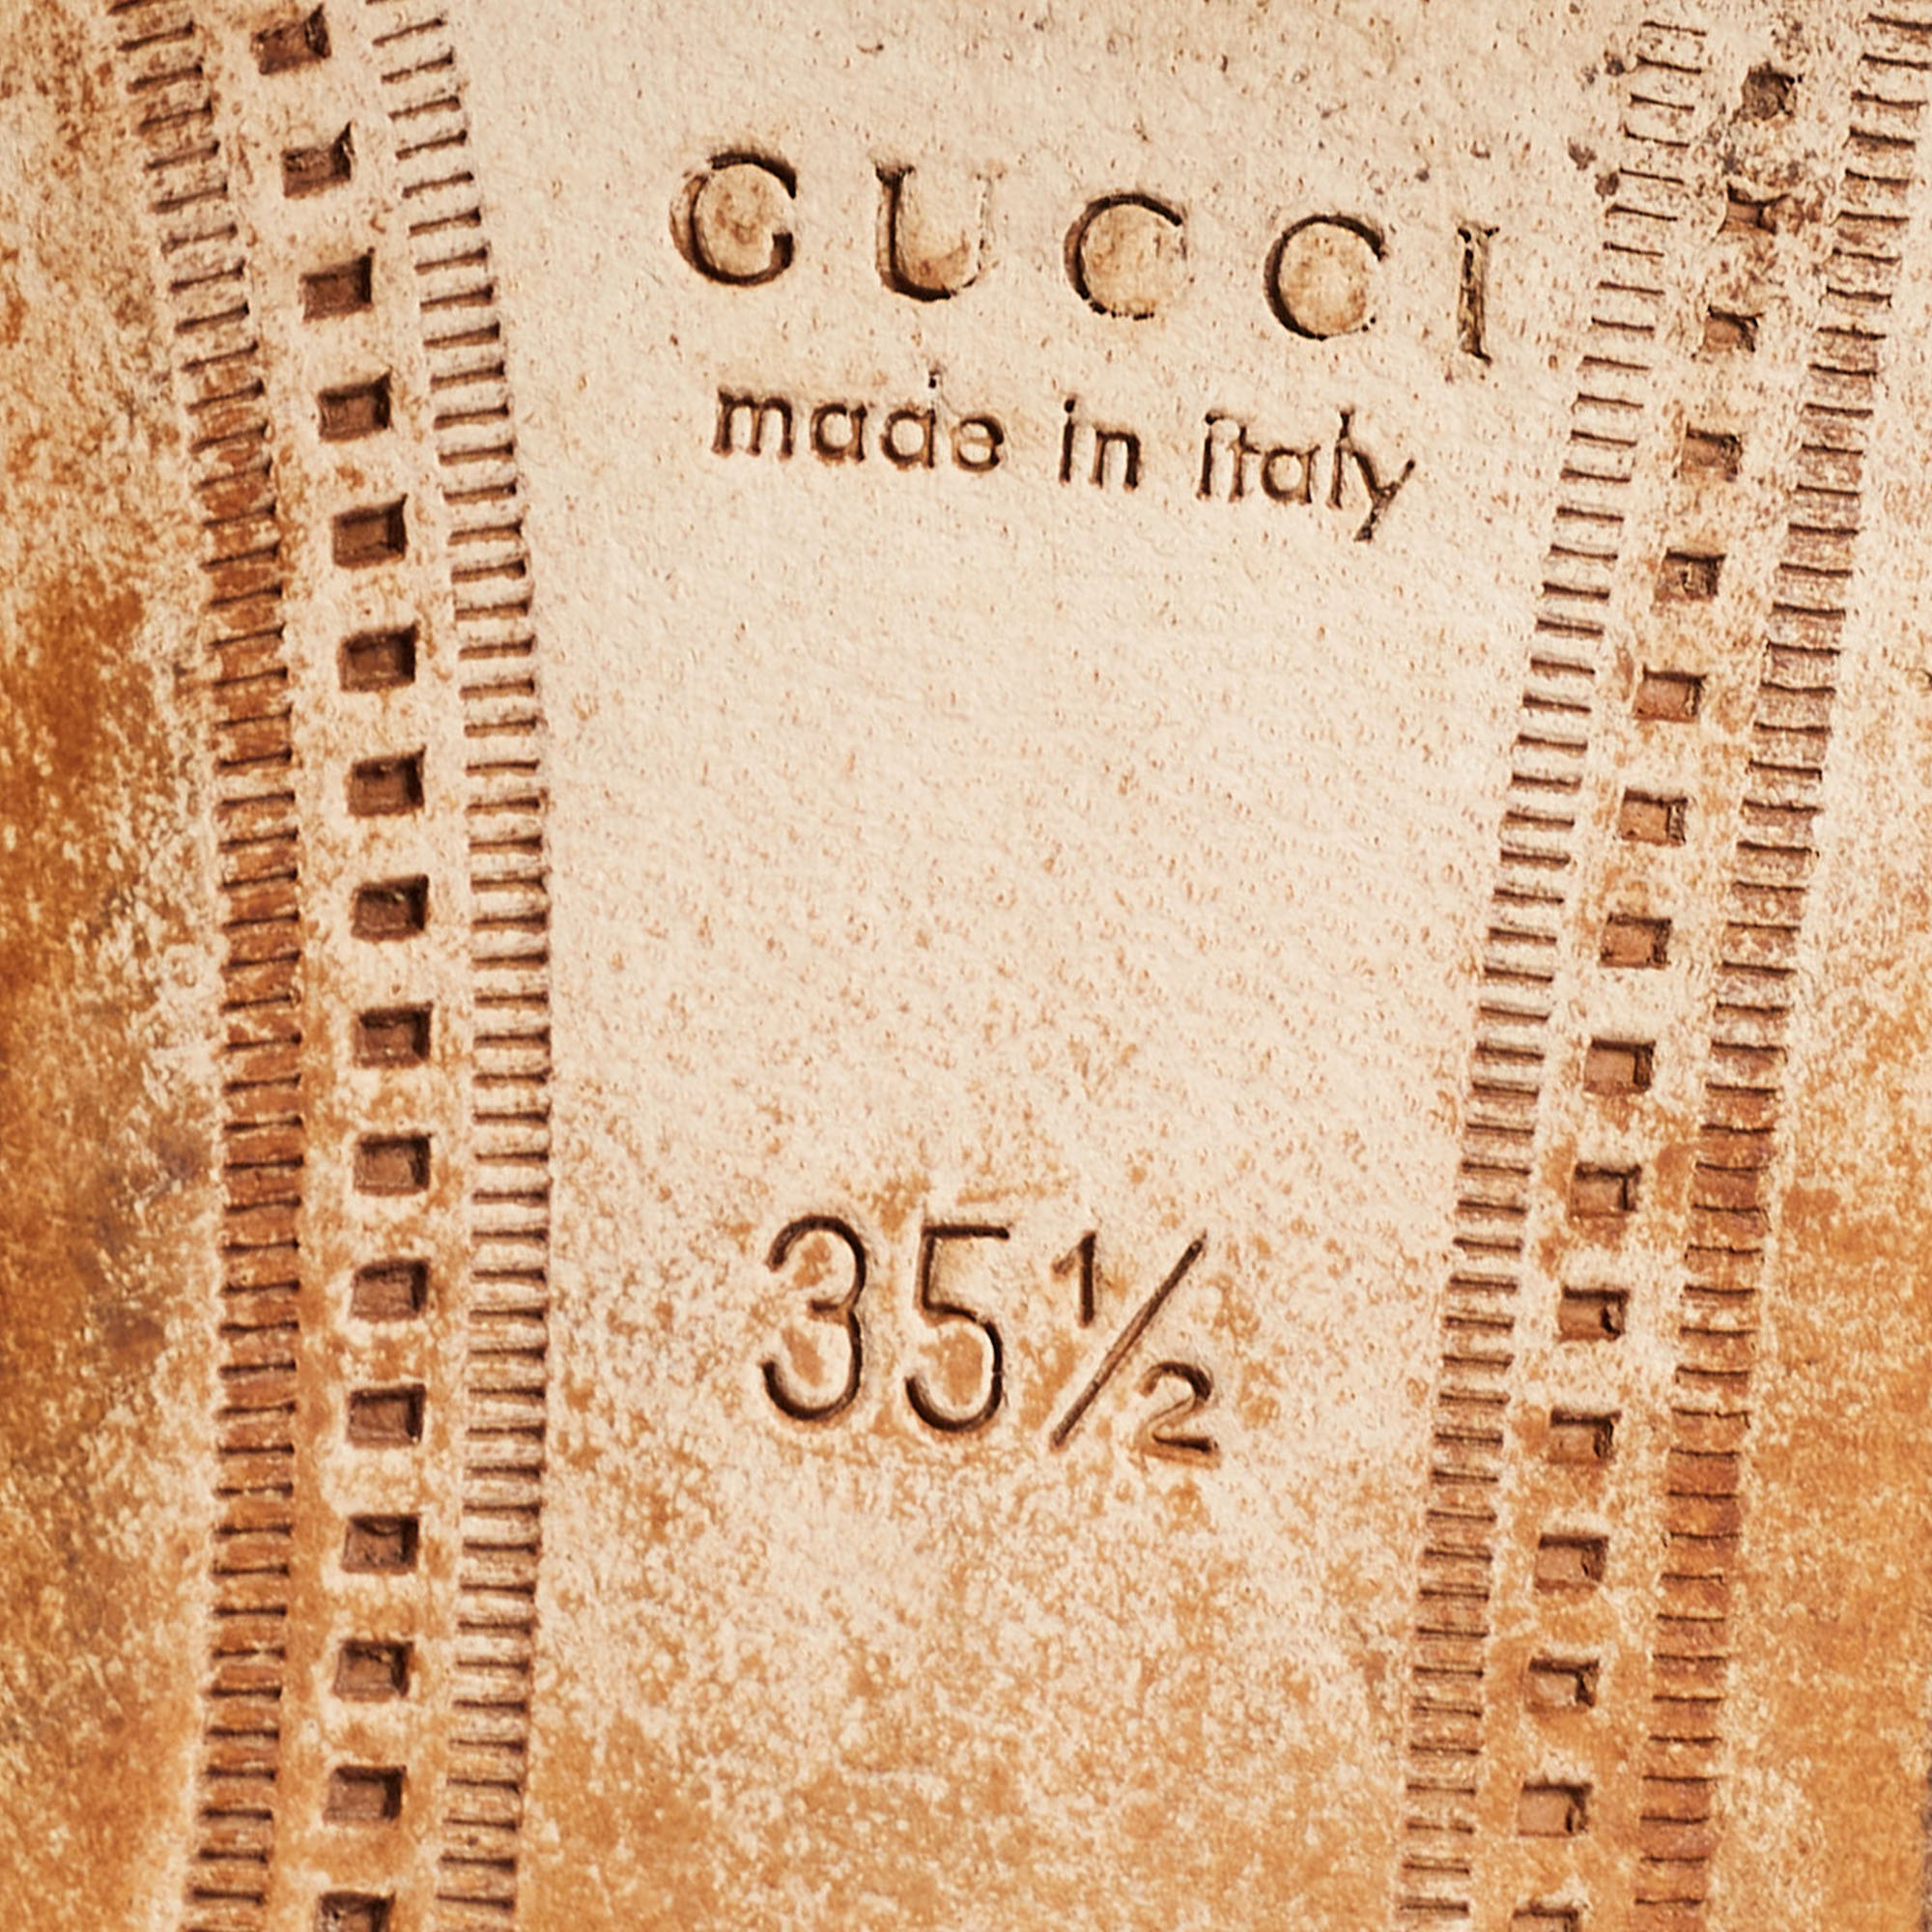 Gucci Black Leather Jordaan Horsebit Slip On Loafers Size 35.5